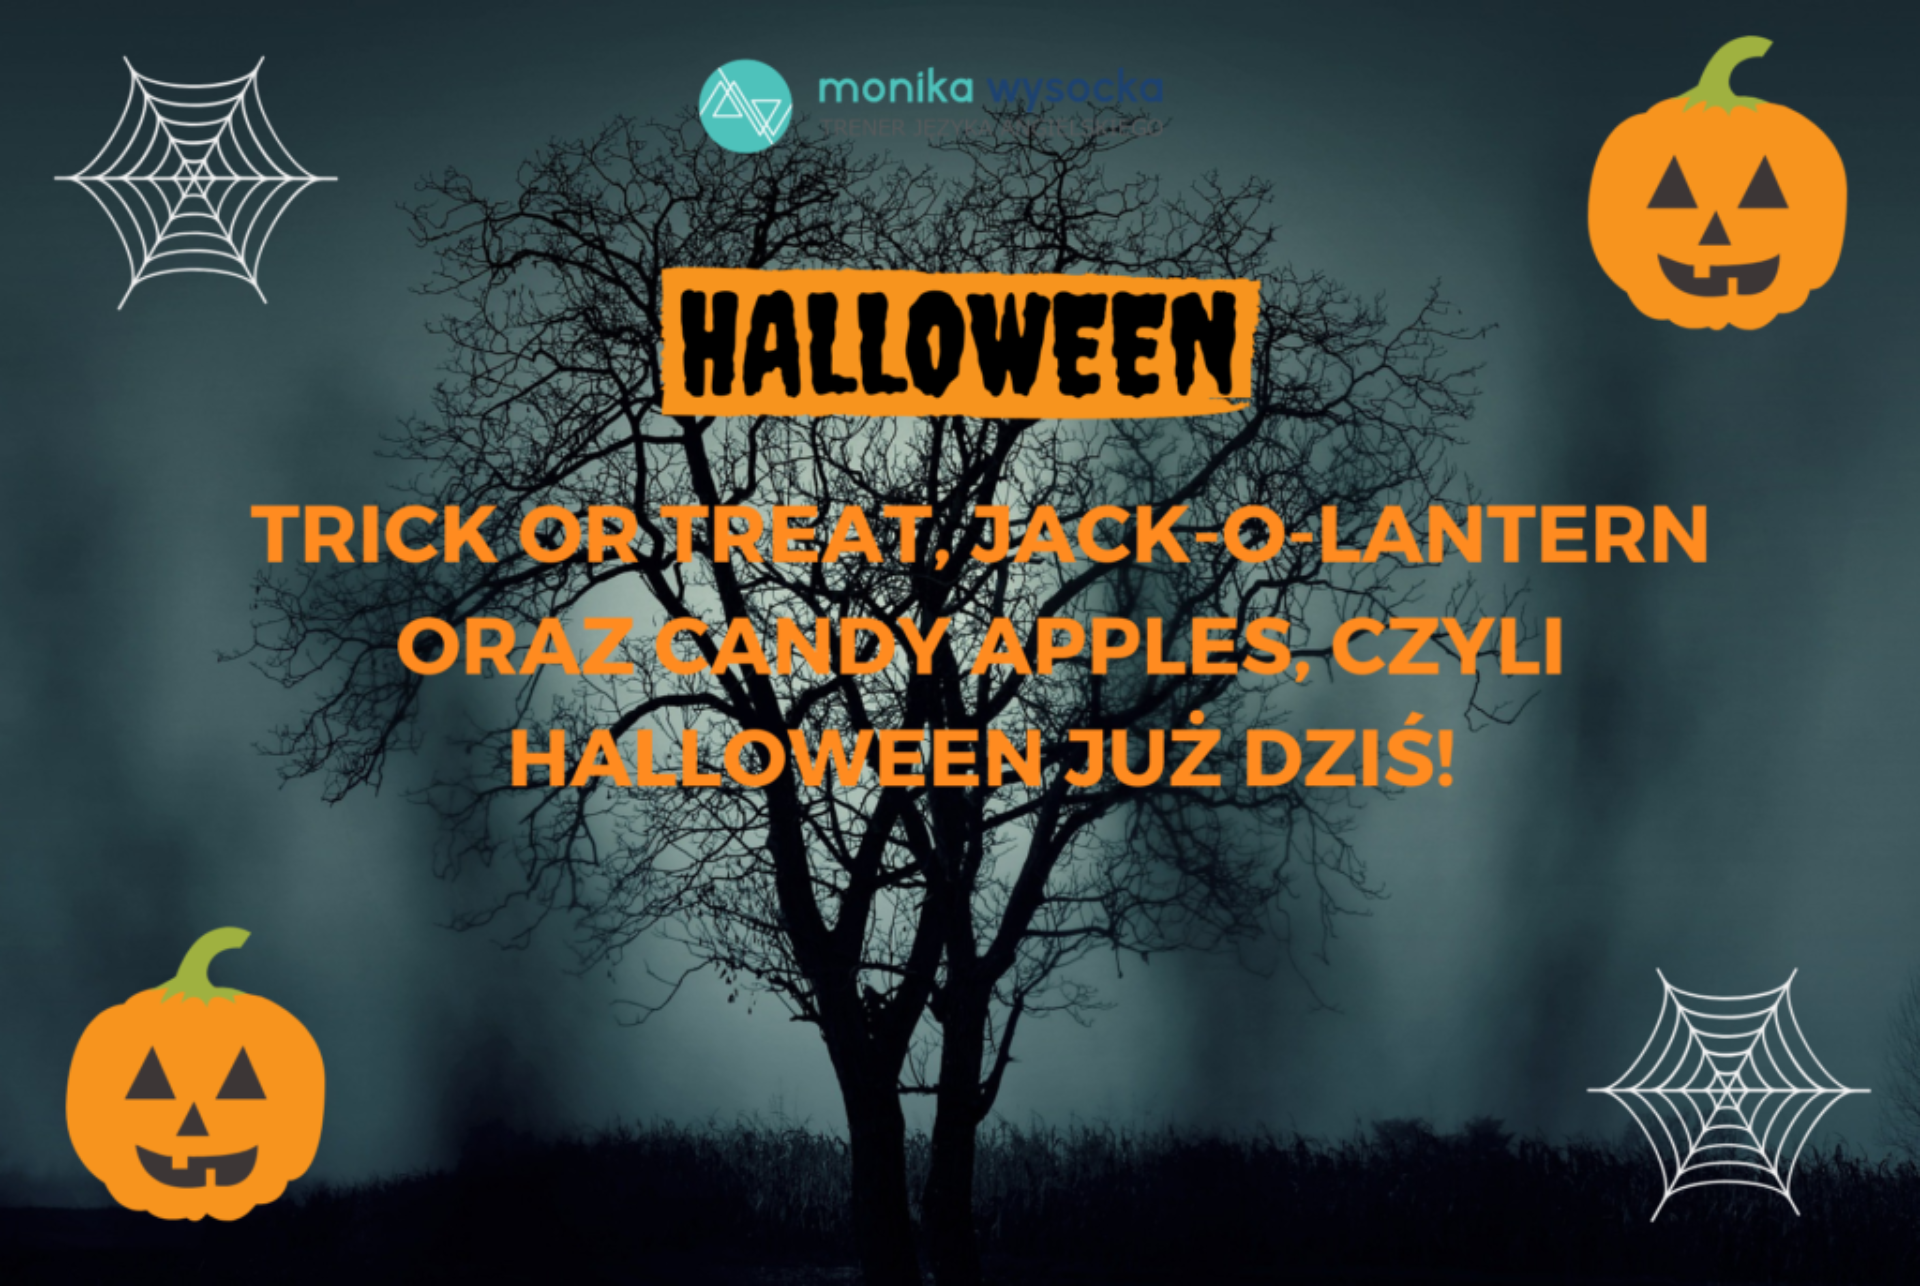 Trick or treat, jack o lantern - Halloween